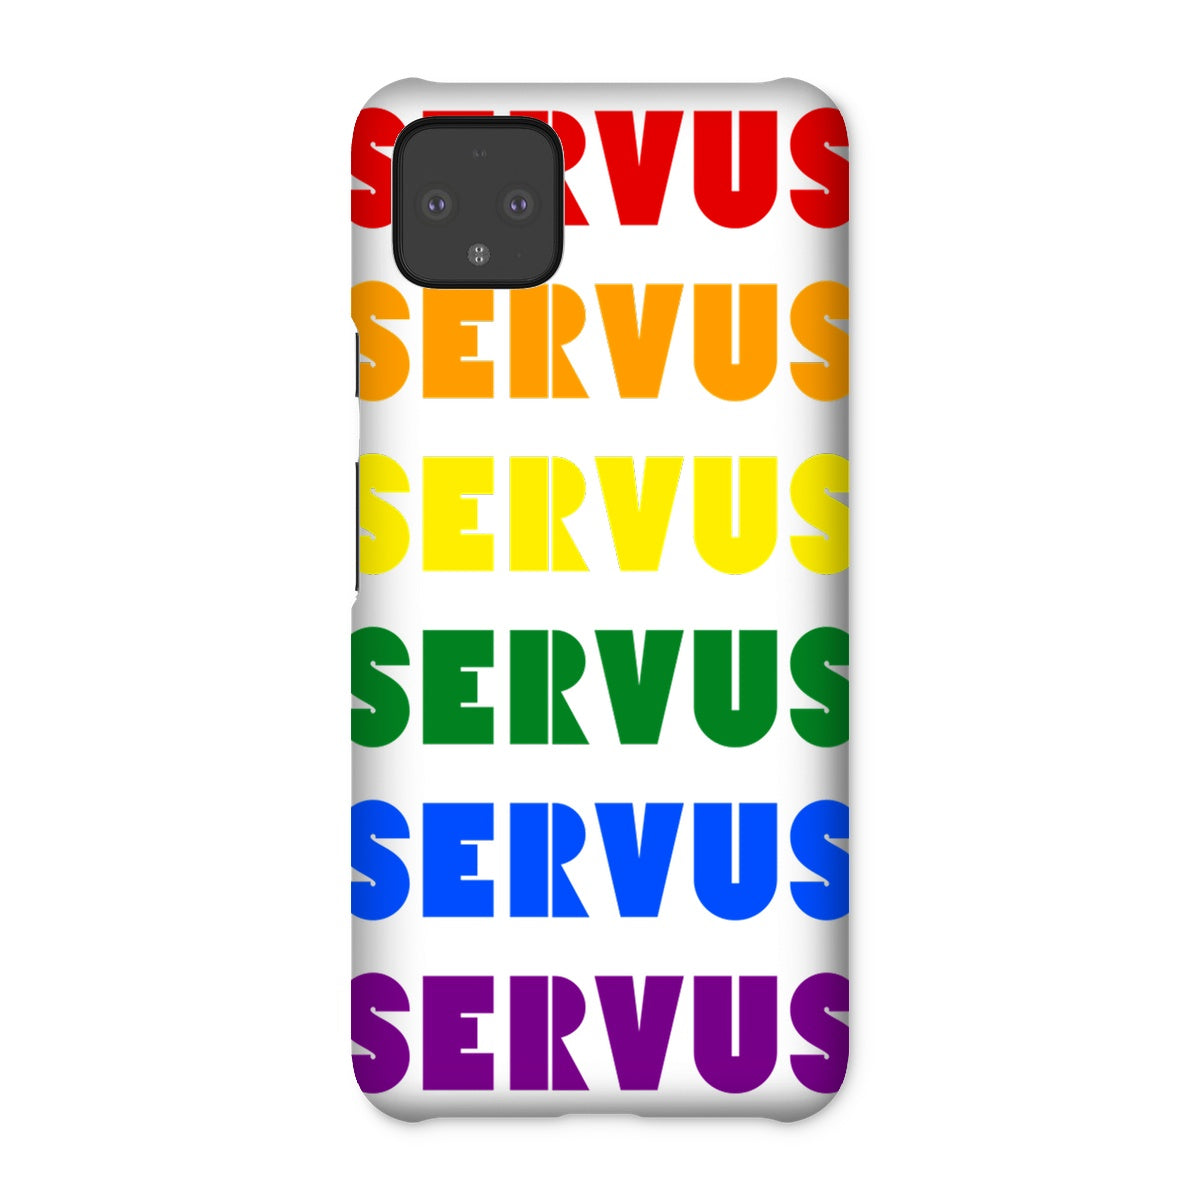 Bavarian Snap Phone Case "Servus" Rainbow / LGBT print, Slim & shatterproof, matt or glossy - for different makes - Bavari Shop - Bavarian Outfits, Dirndl, Lederhosen & Accessories